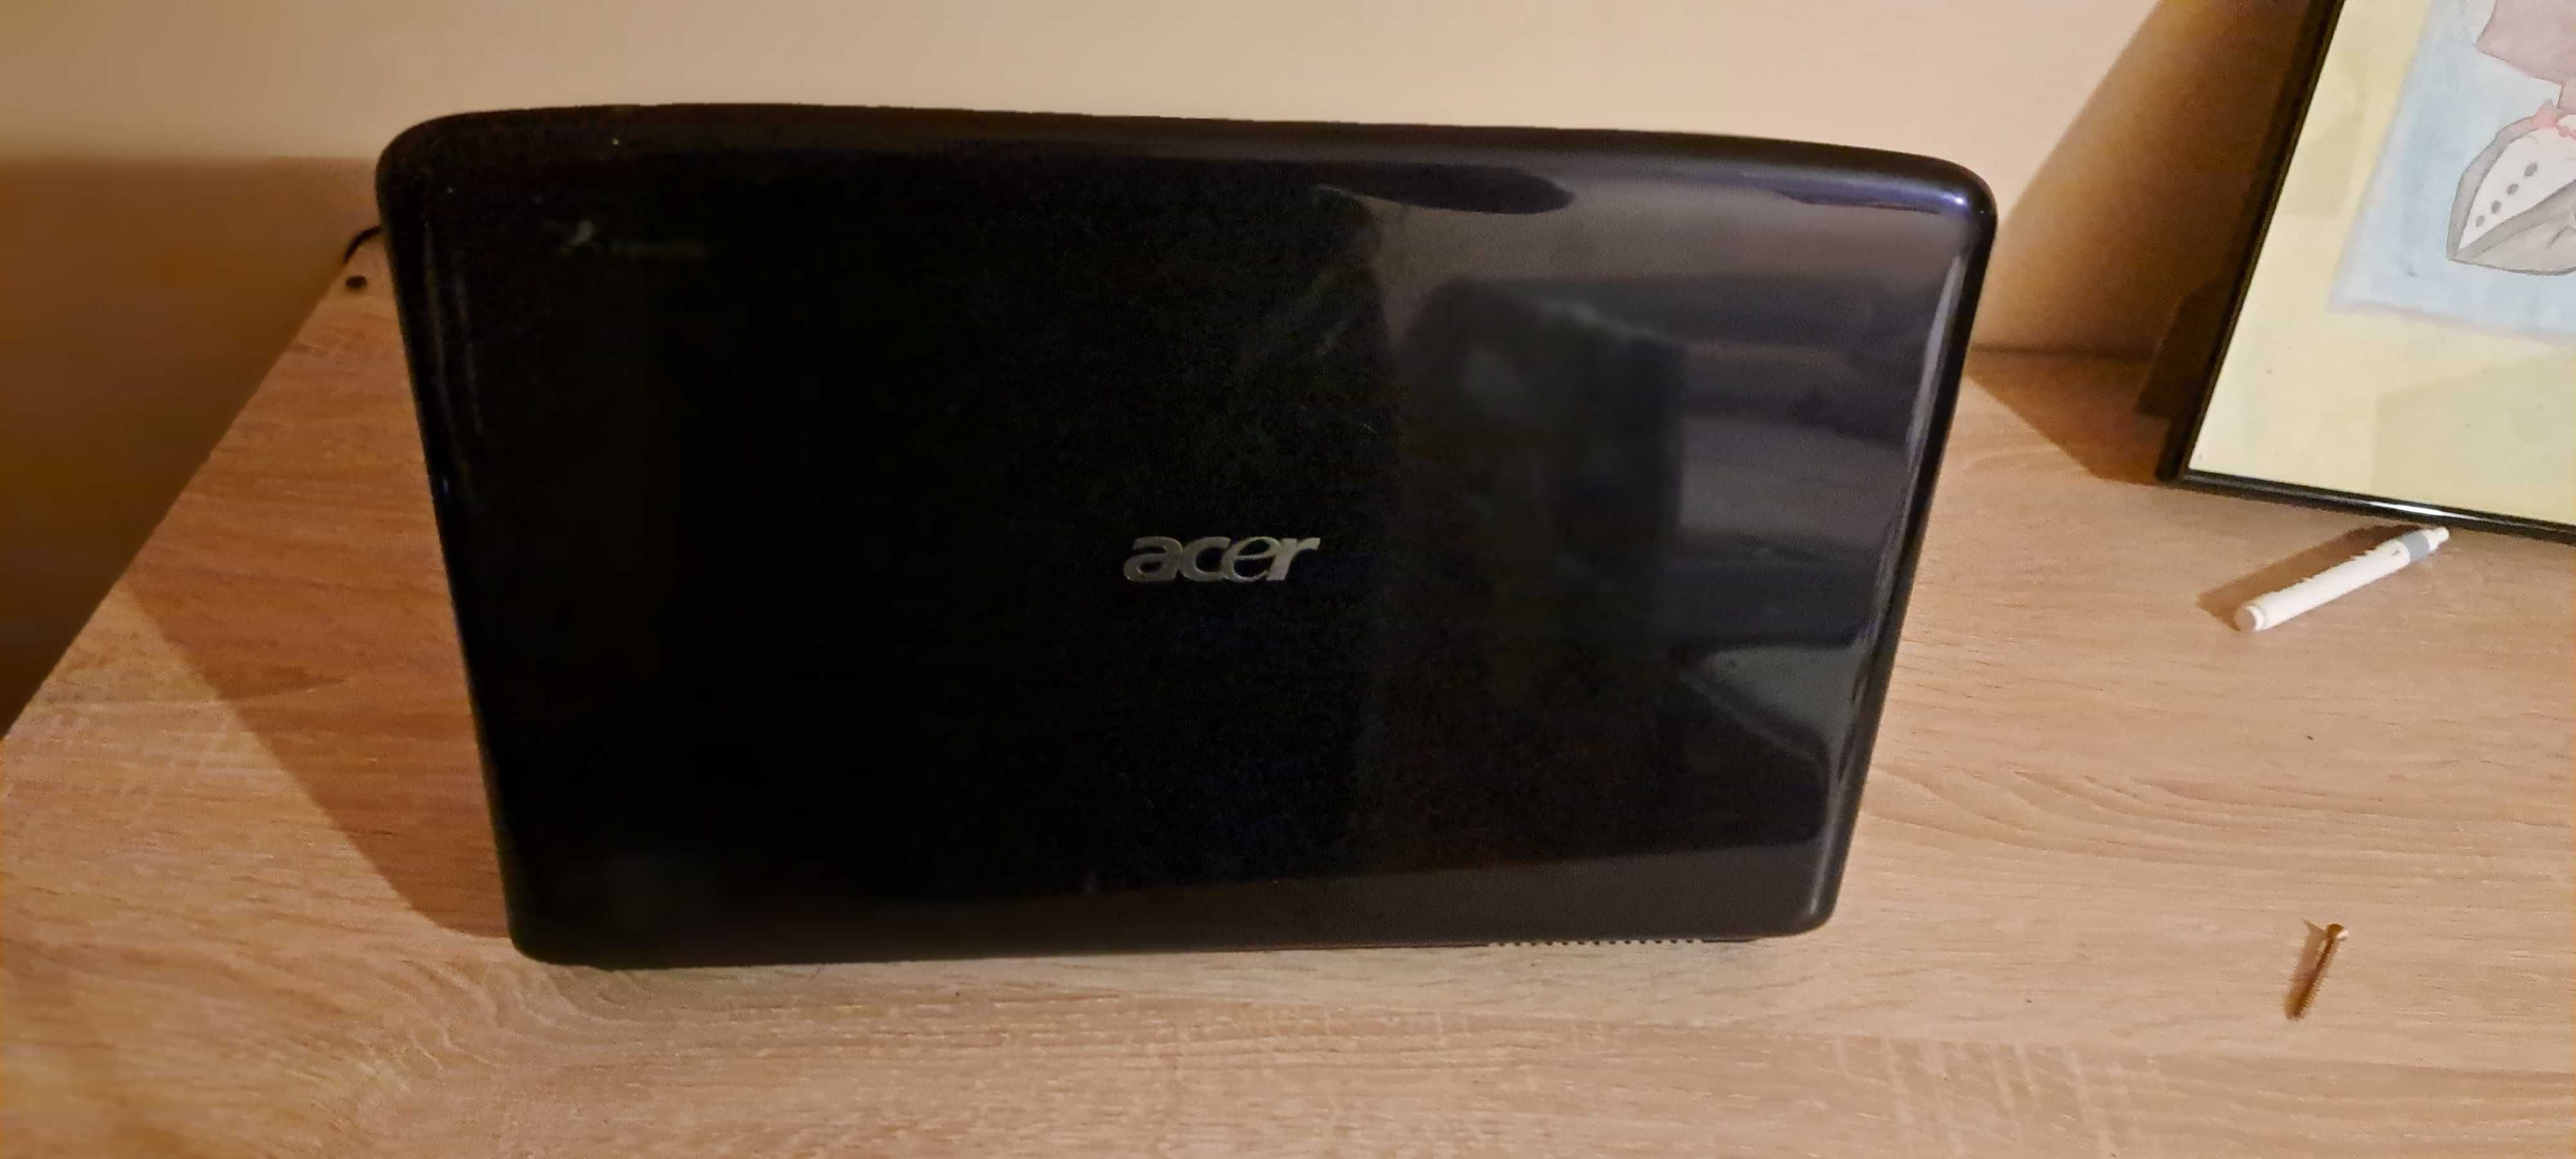 Acer Aspire 5738G